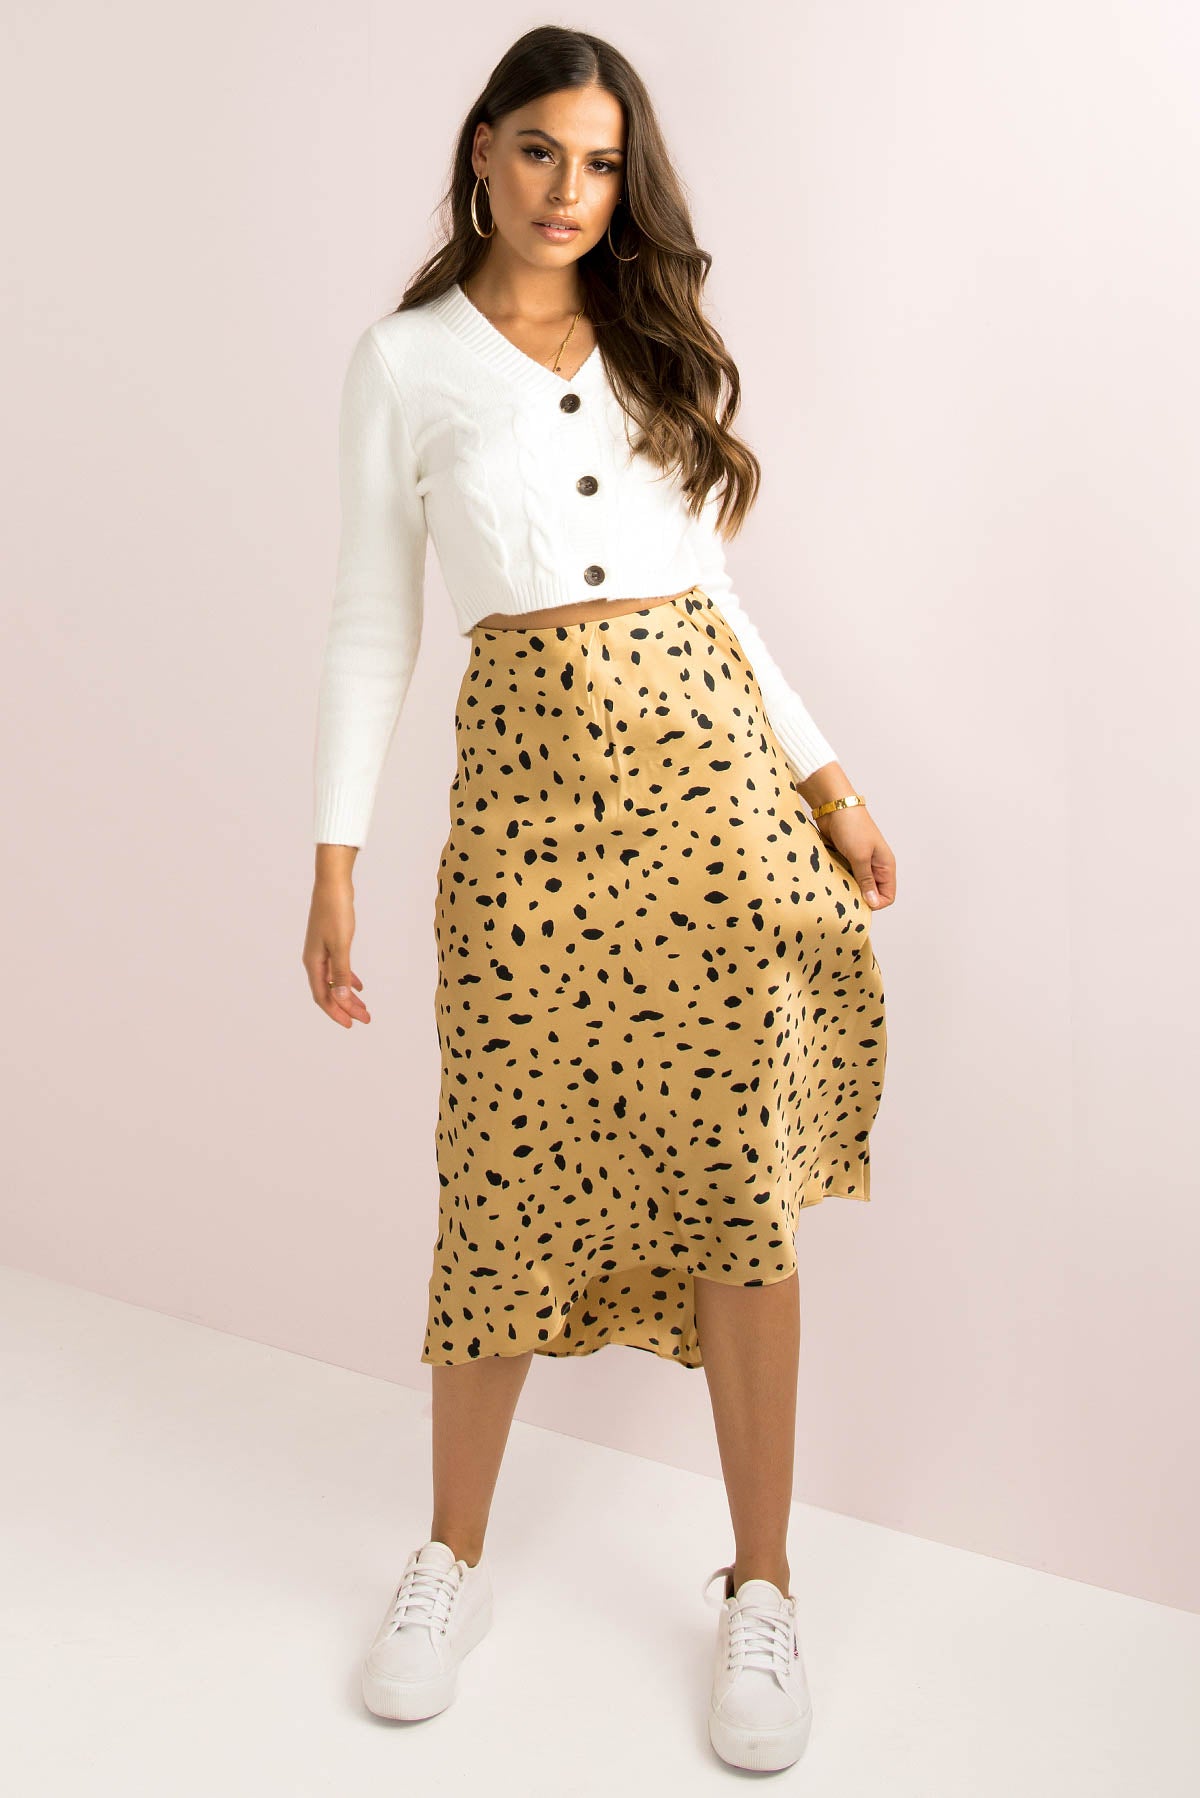 Grace Cardi in White and Regan Skirt in Leopard